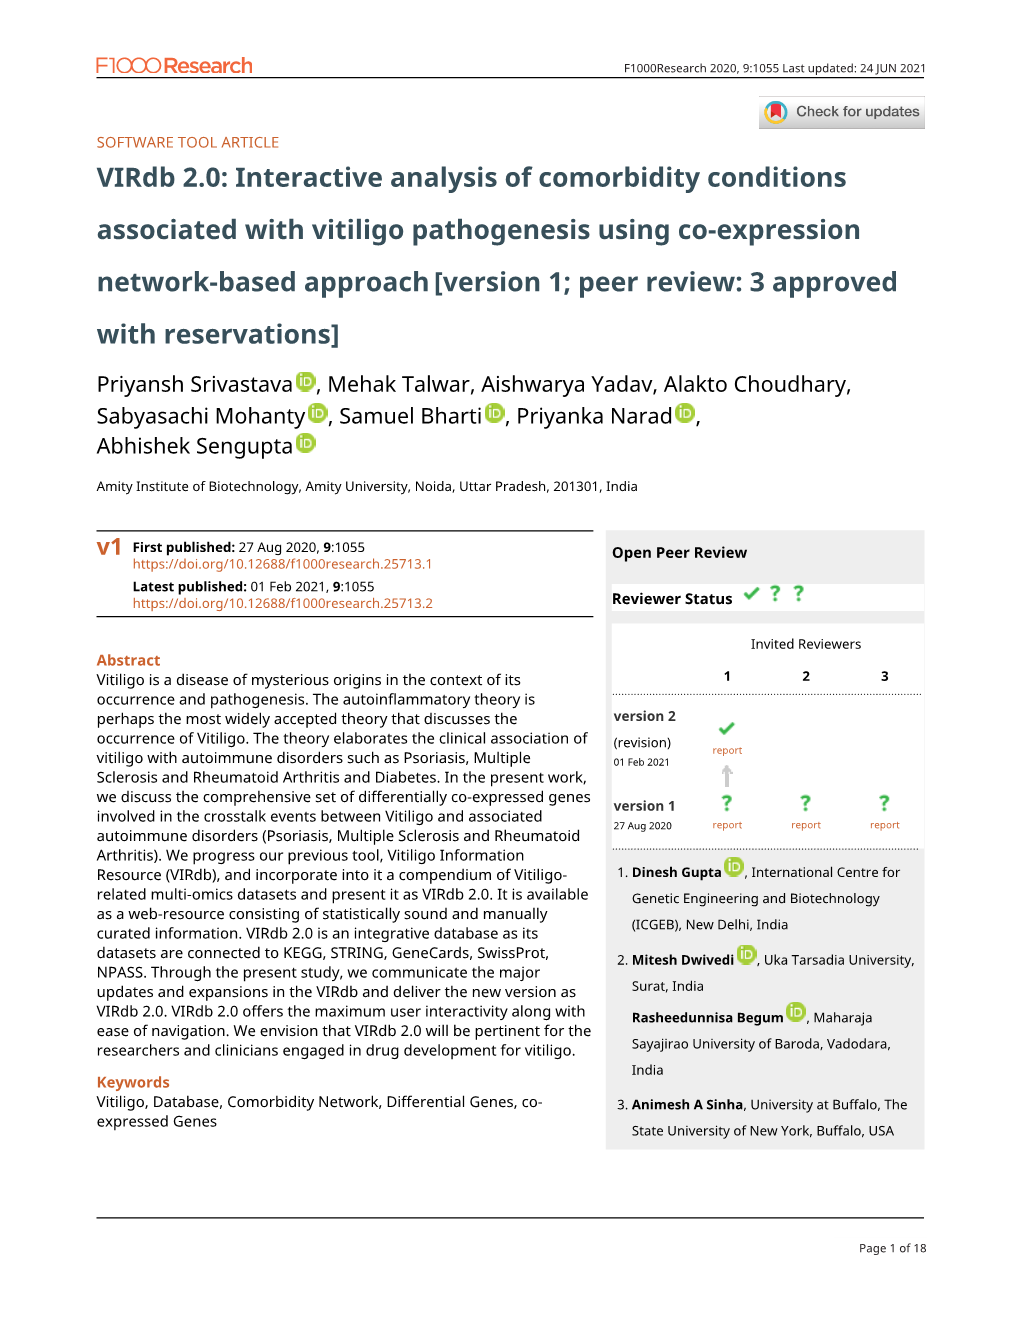 Interactive Analysis of Comorbidity Conditions Associated with Vitiligo